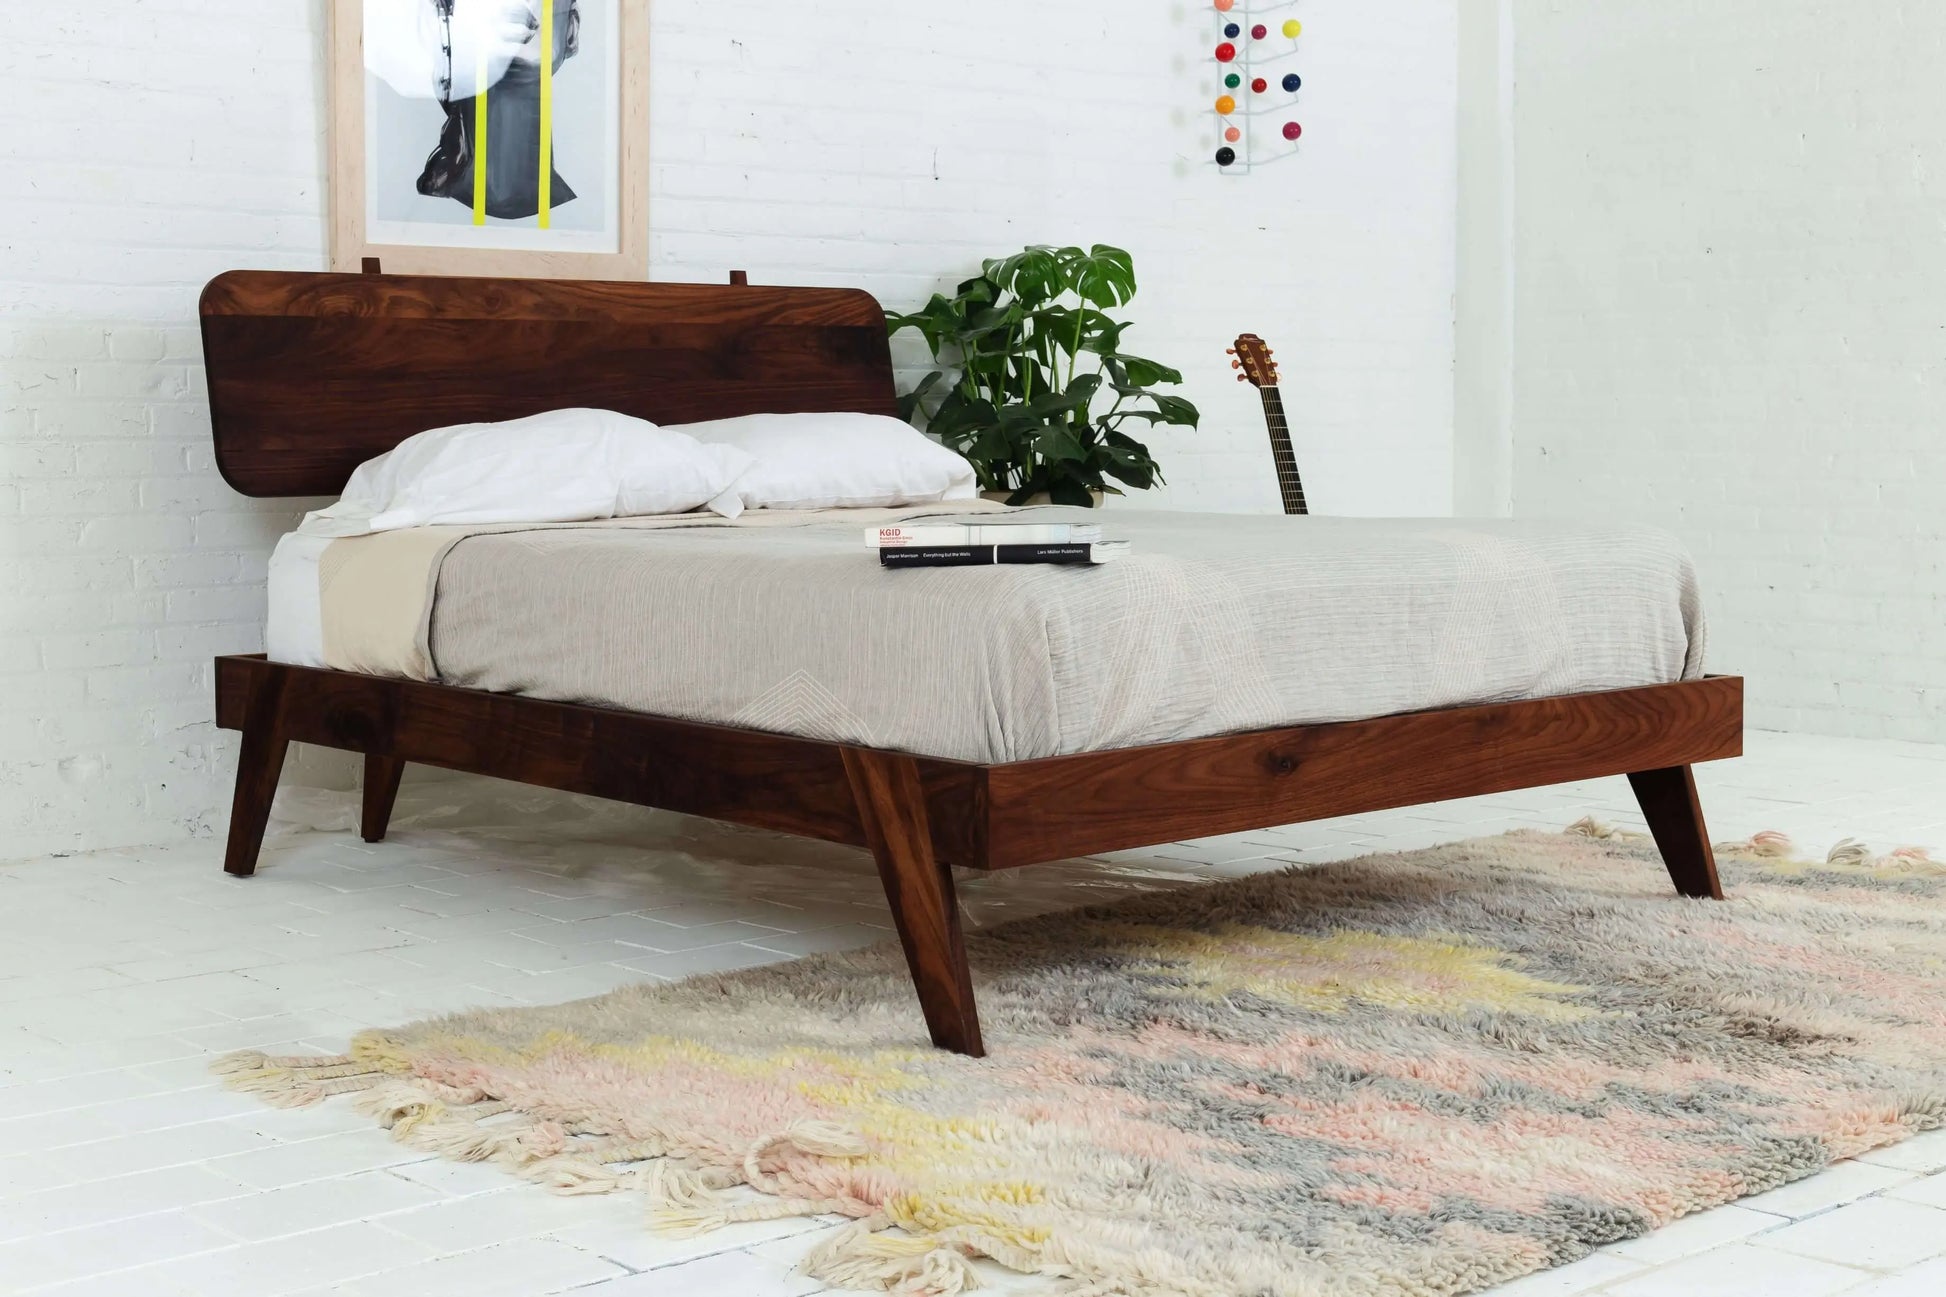 "Modern walnut bed frame with sleek design"